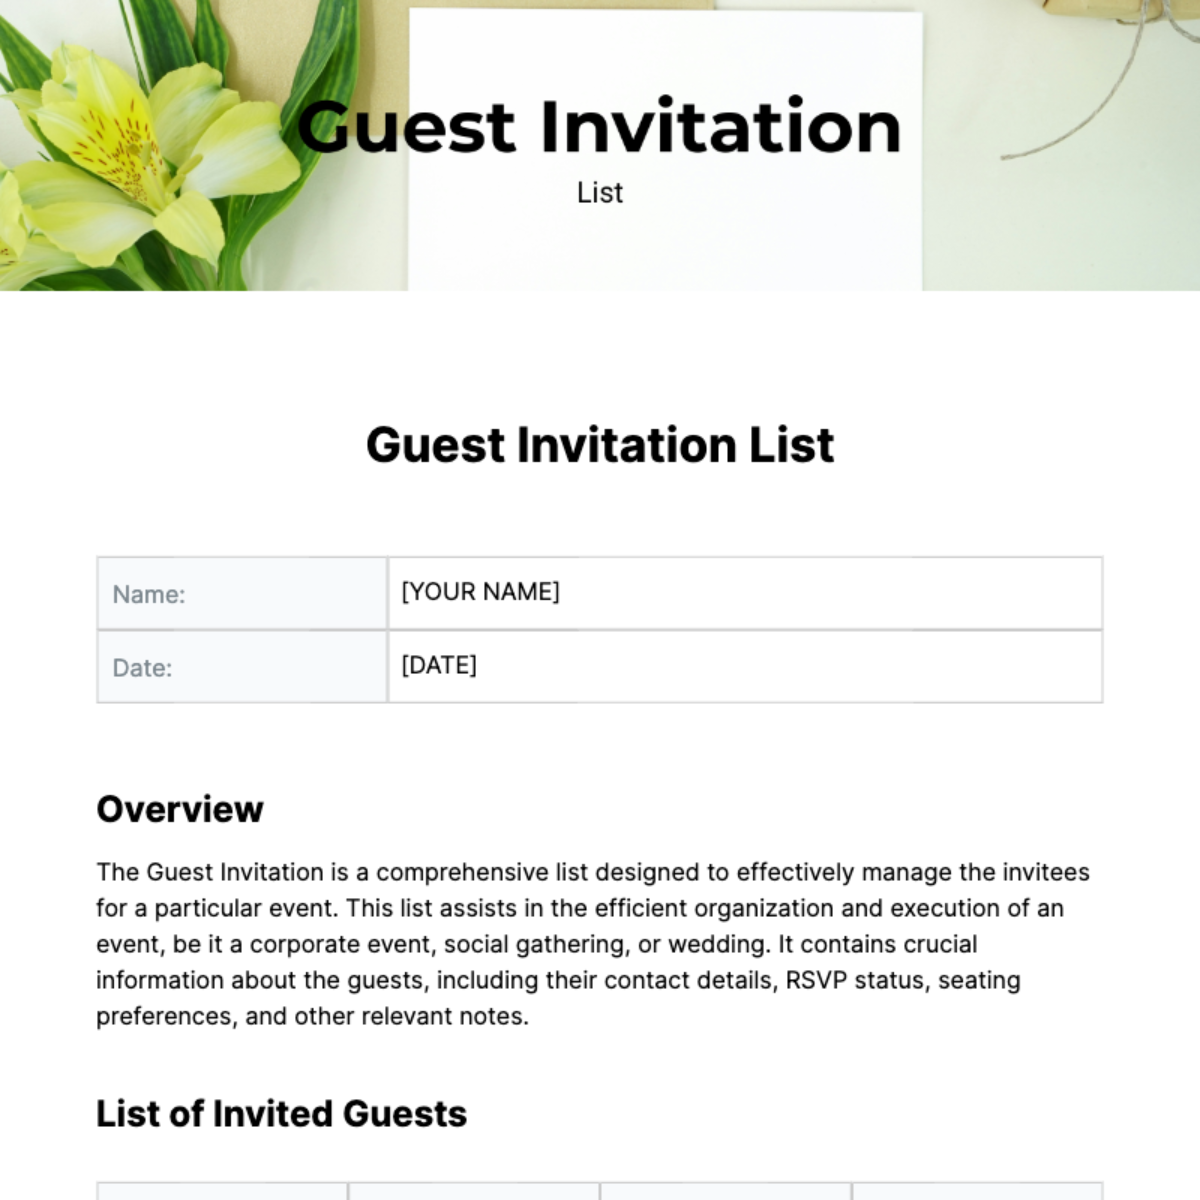 Guest Invitation List Template